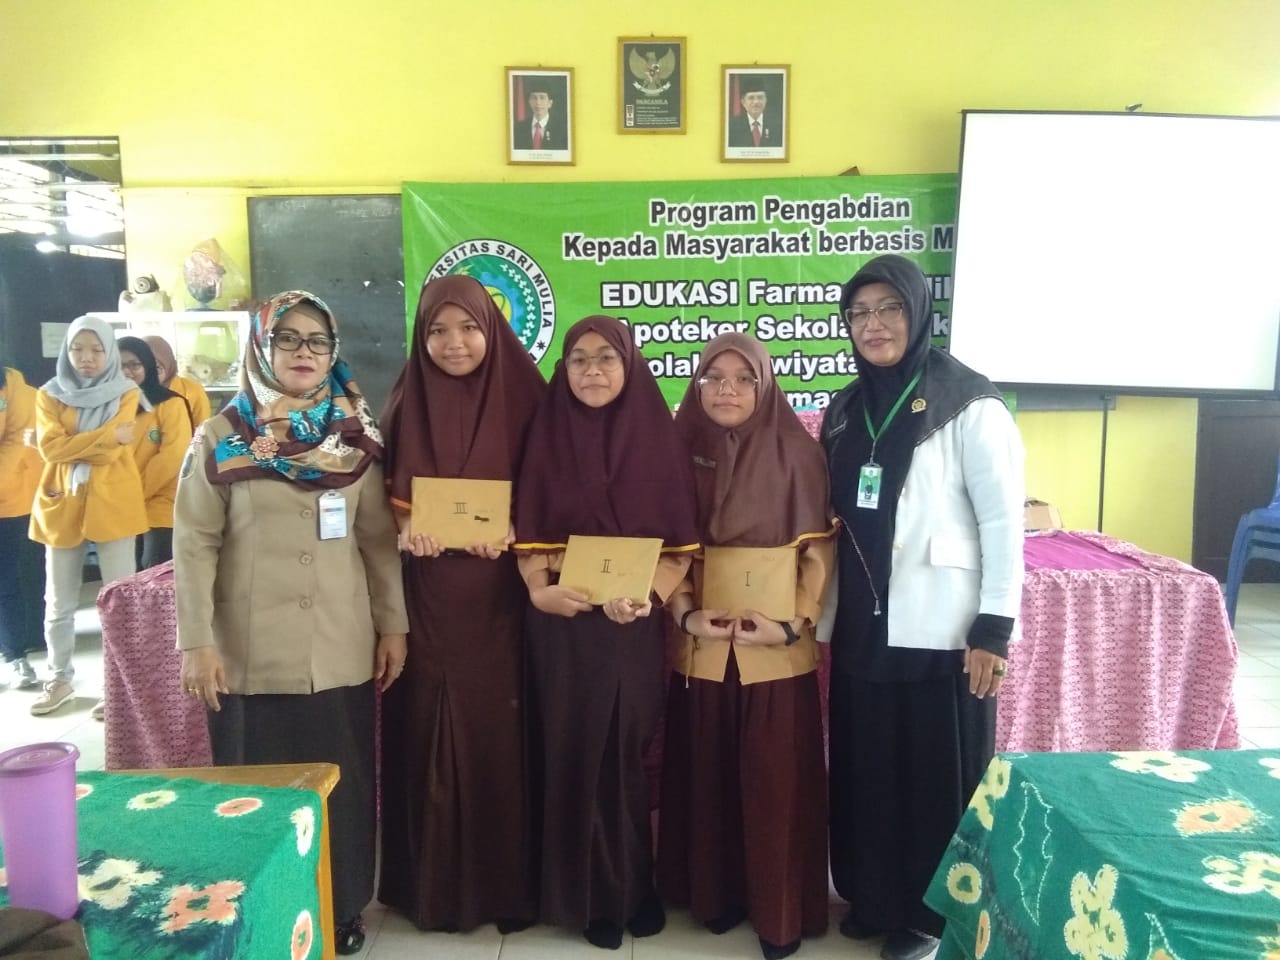 Pengabdian Kepada Masyarakat, Edukasi Farmasi Cilik (Apoteker Sekolah Cilik) di Sekolah Adiwiyata SMPN 19 Banjarmasin